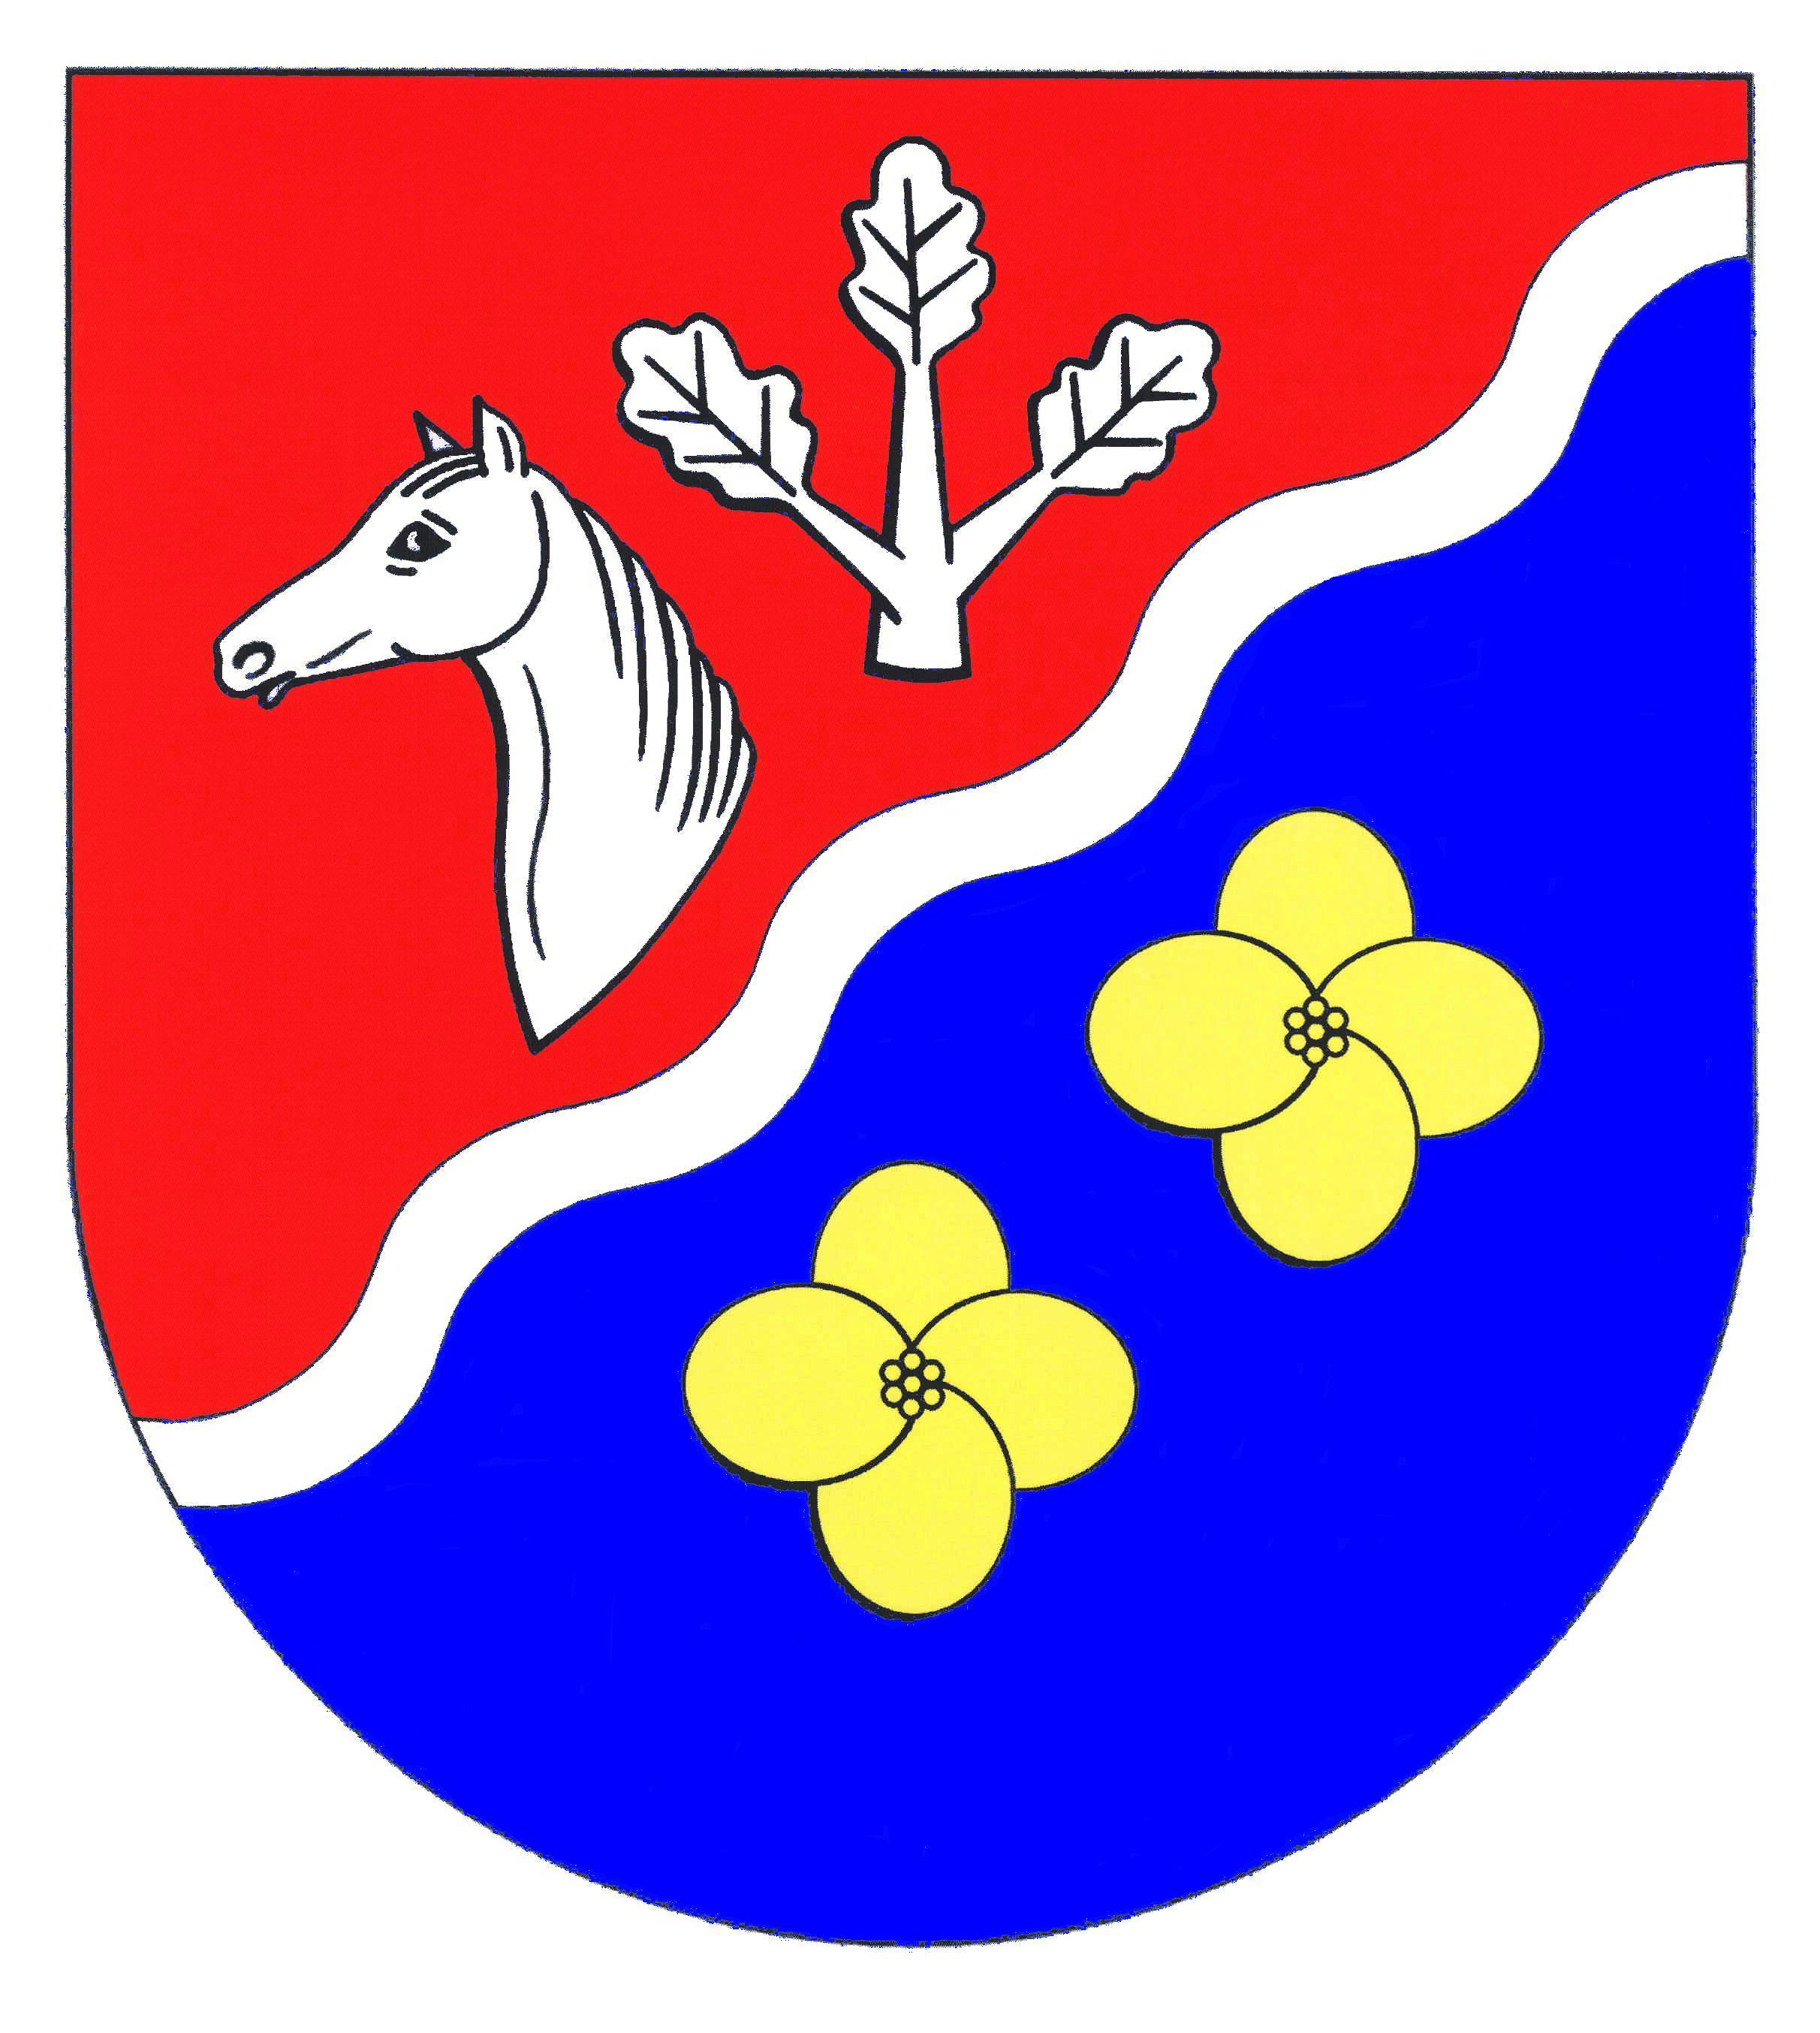 Wappen Amt Trave-Land, Kreis Segeberg